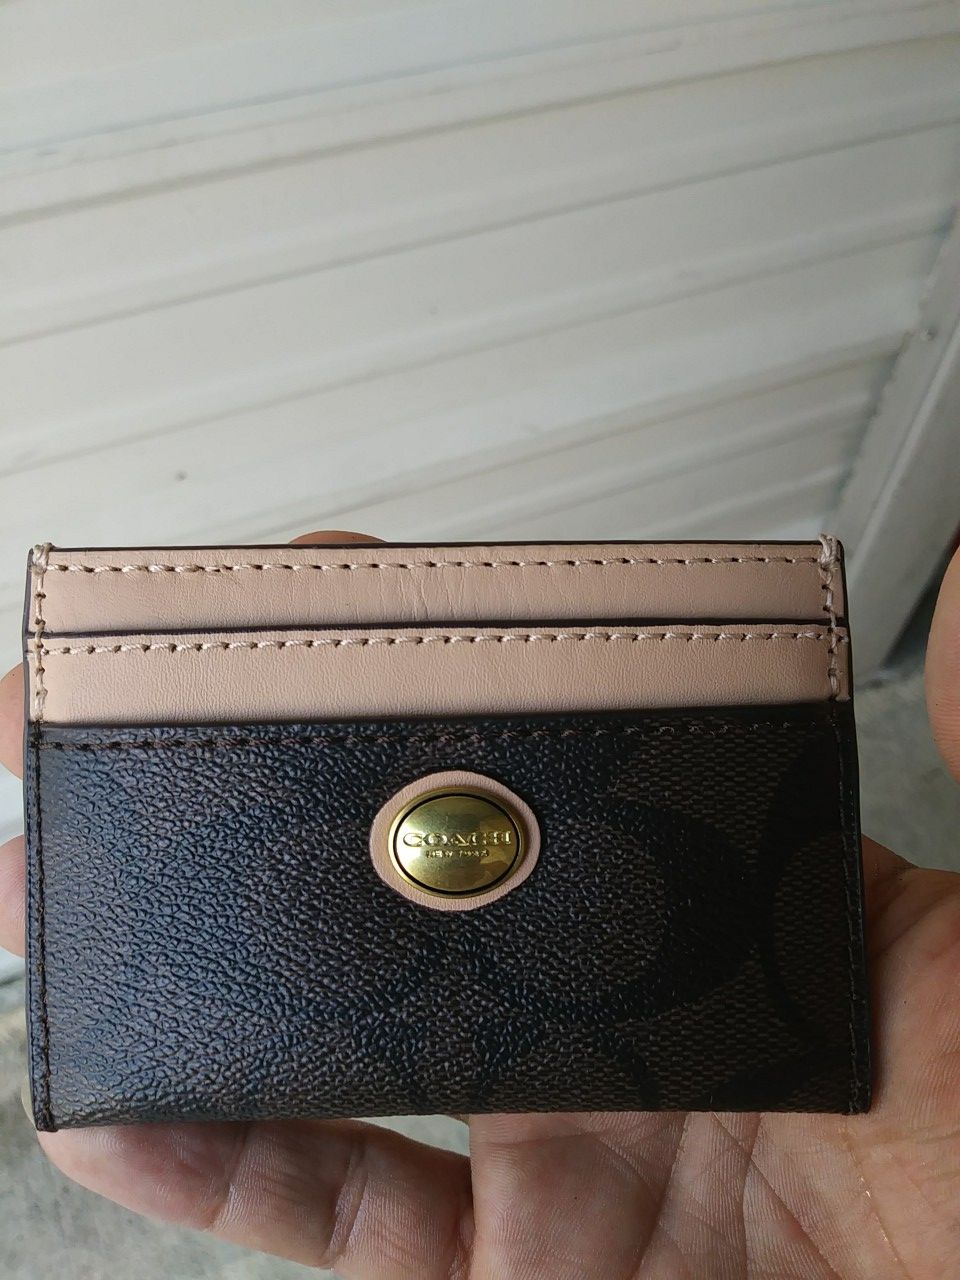 Woman's Coach wallet